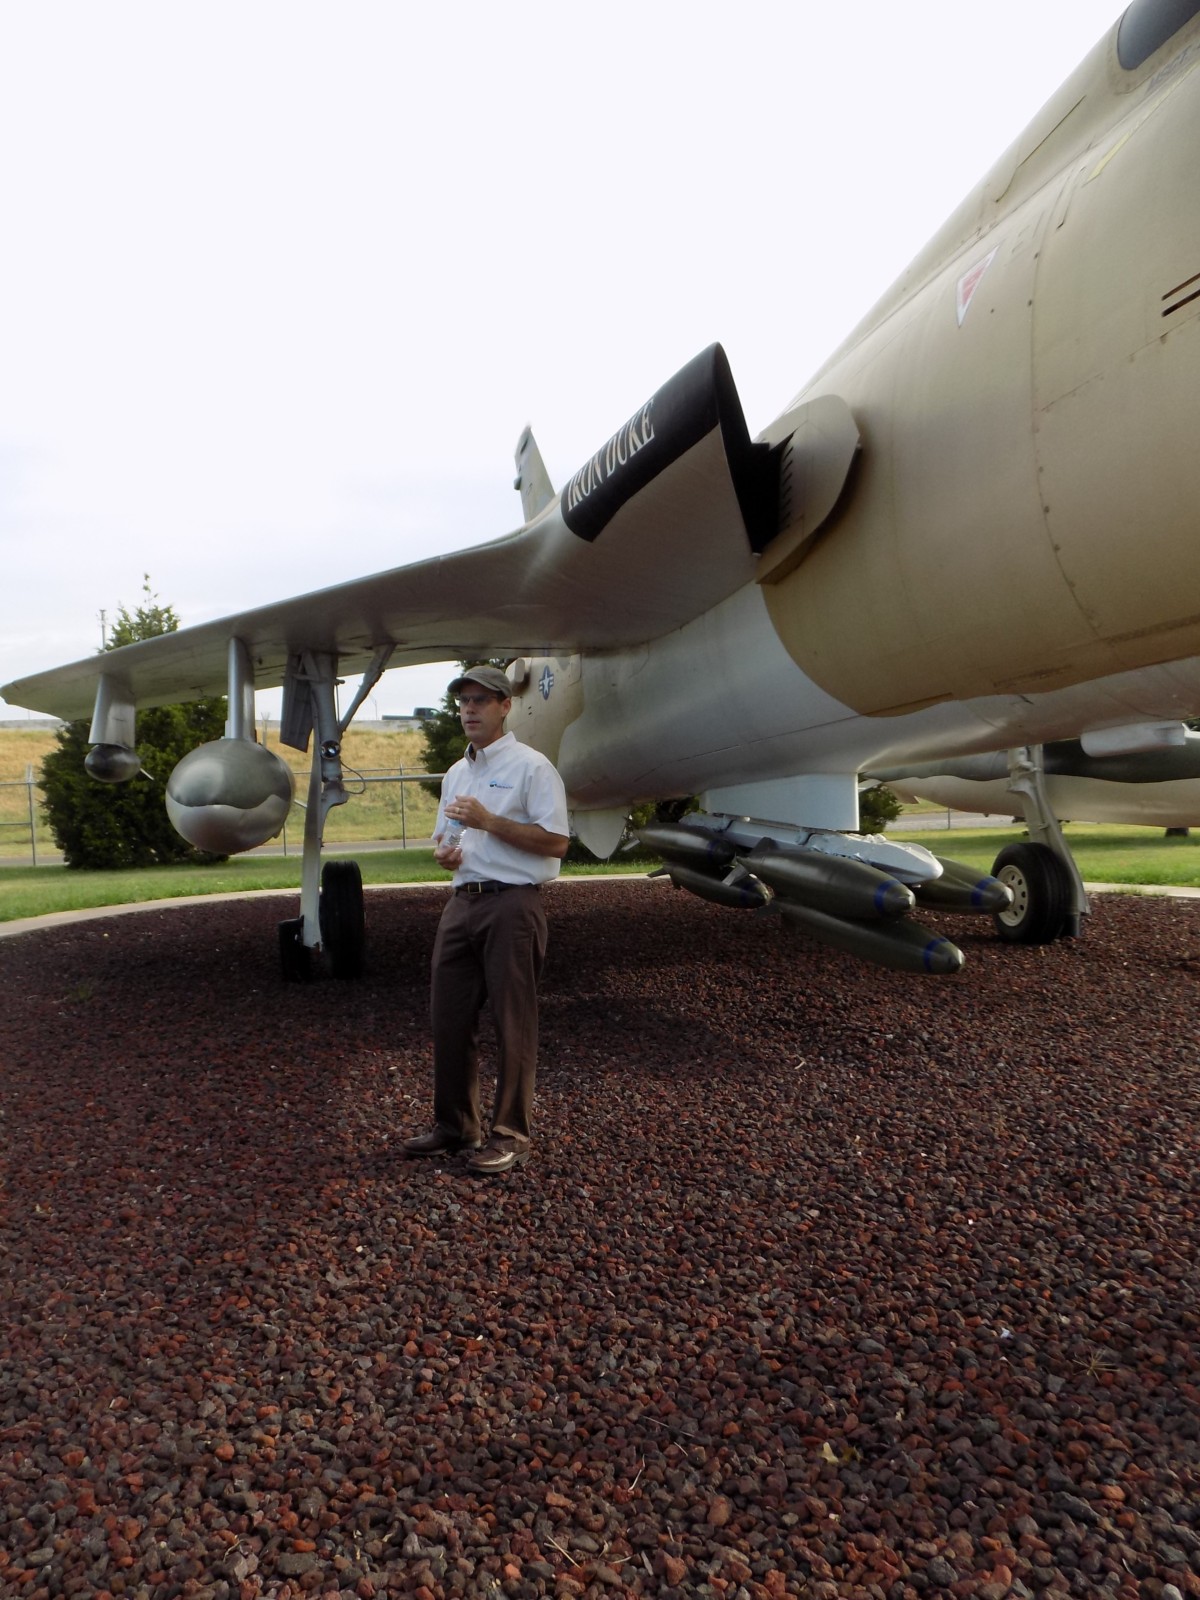 Steve near an F-105 "Thud" fighter-bomber on a recent Intro to Aeronautics field trip.